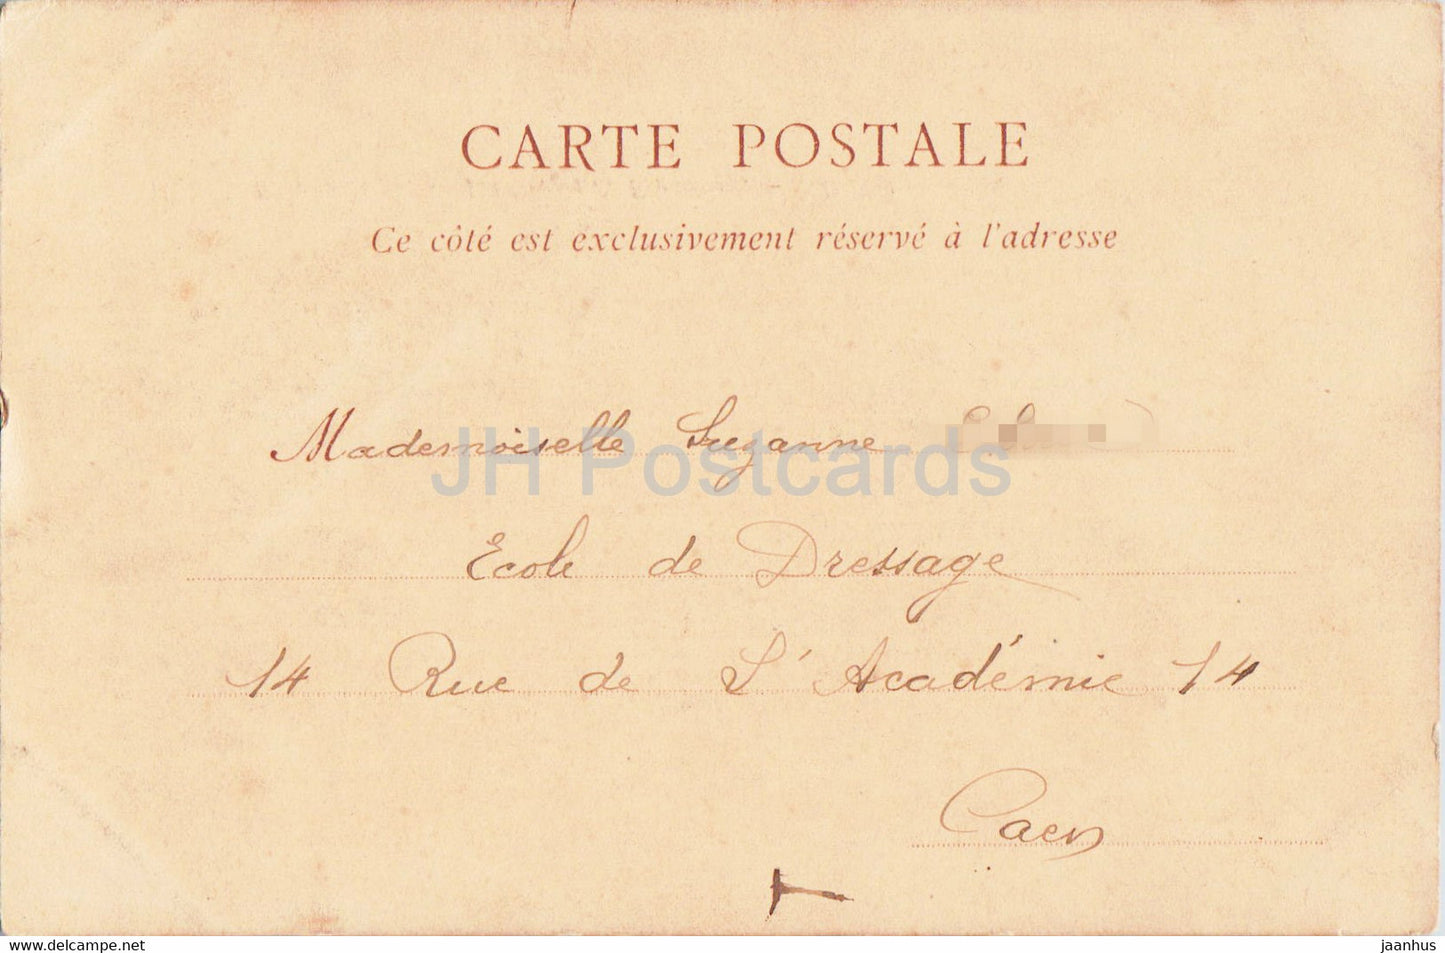 Foret de Fontainebleau - Les Gorges de Franchard - 60 - old postcard - France - used